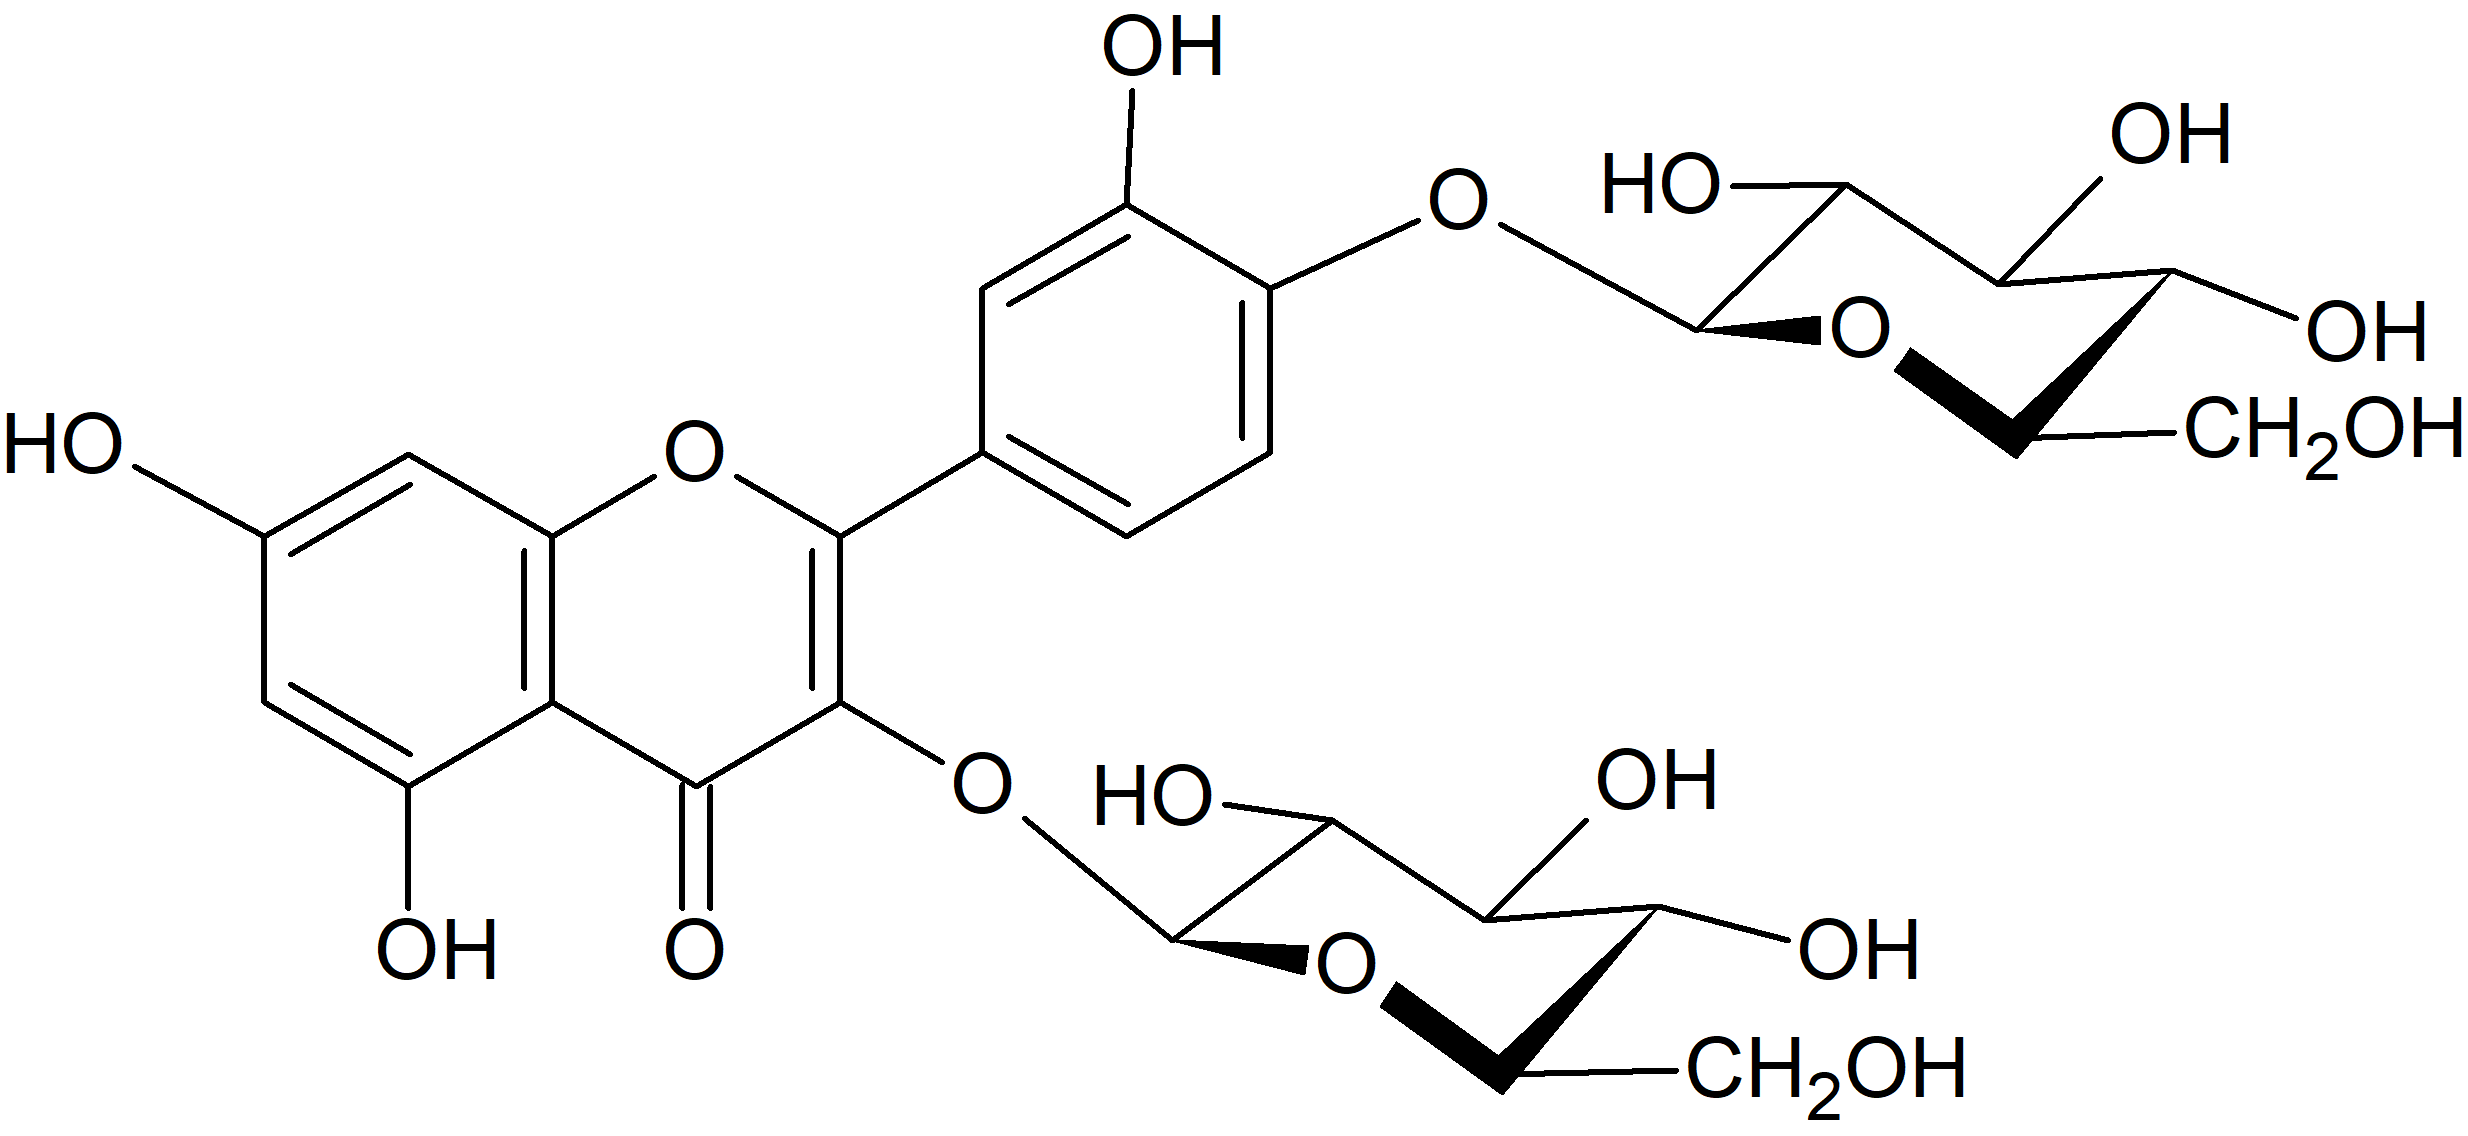 Quercetin 3,4'-diglucoside